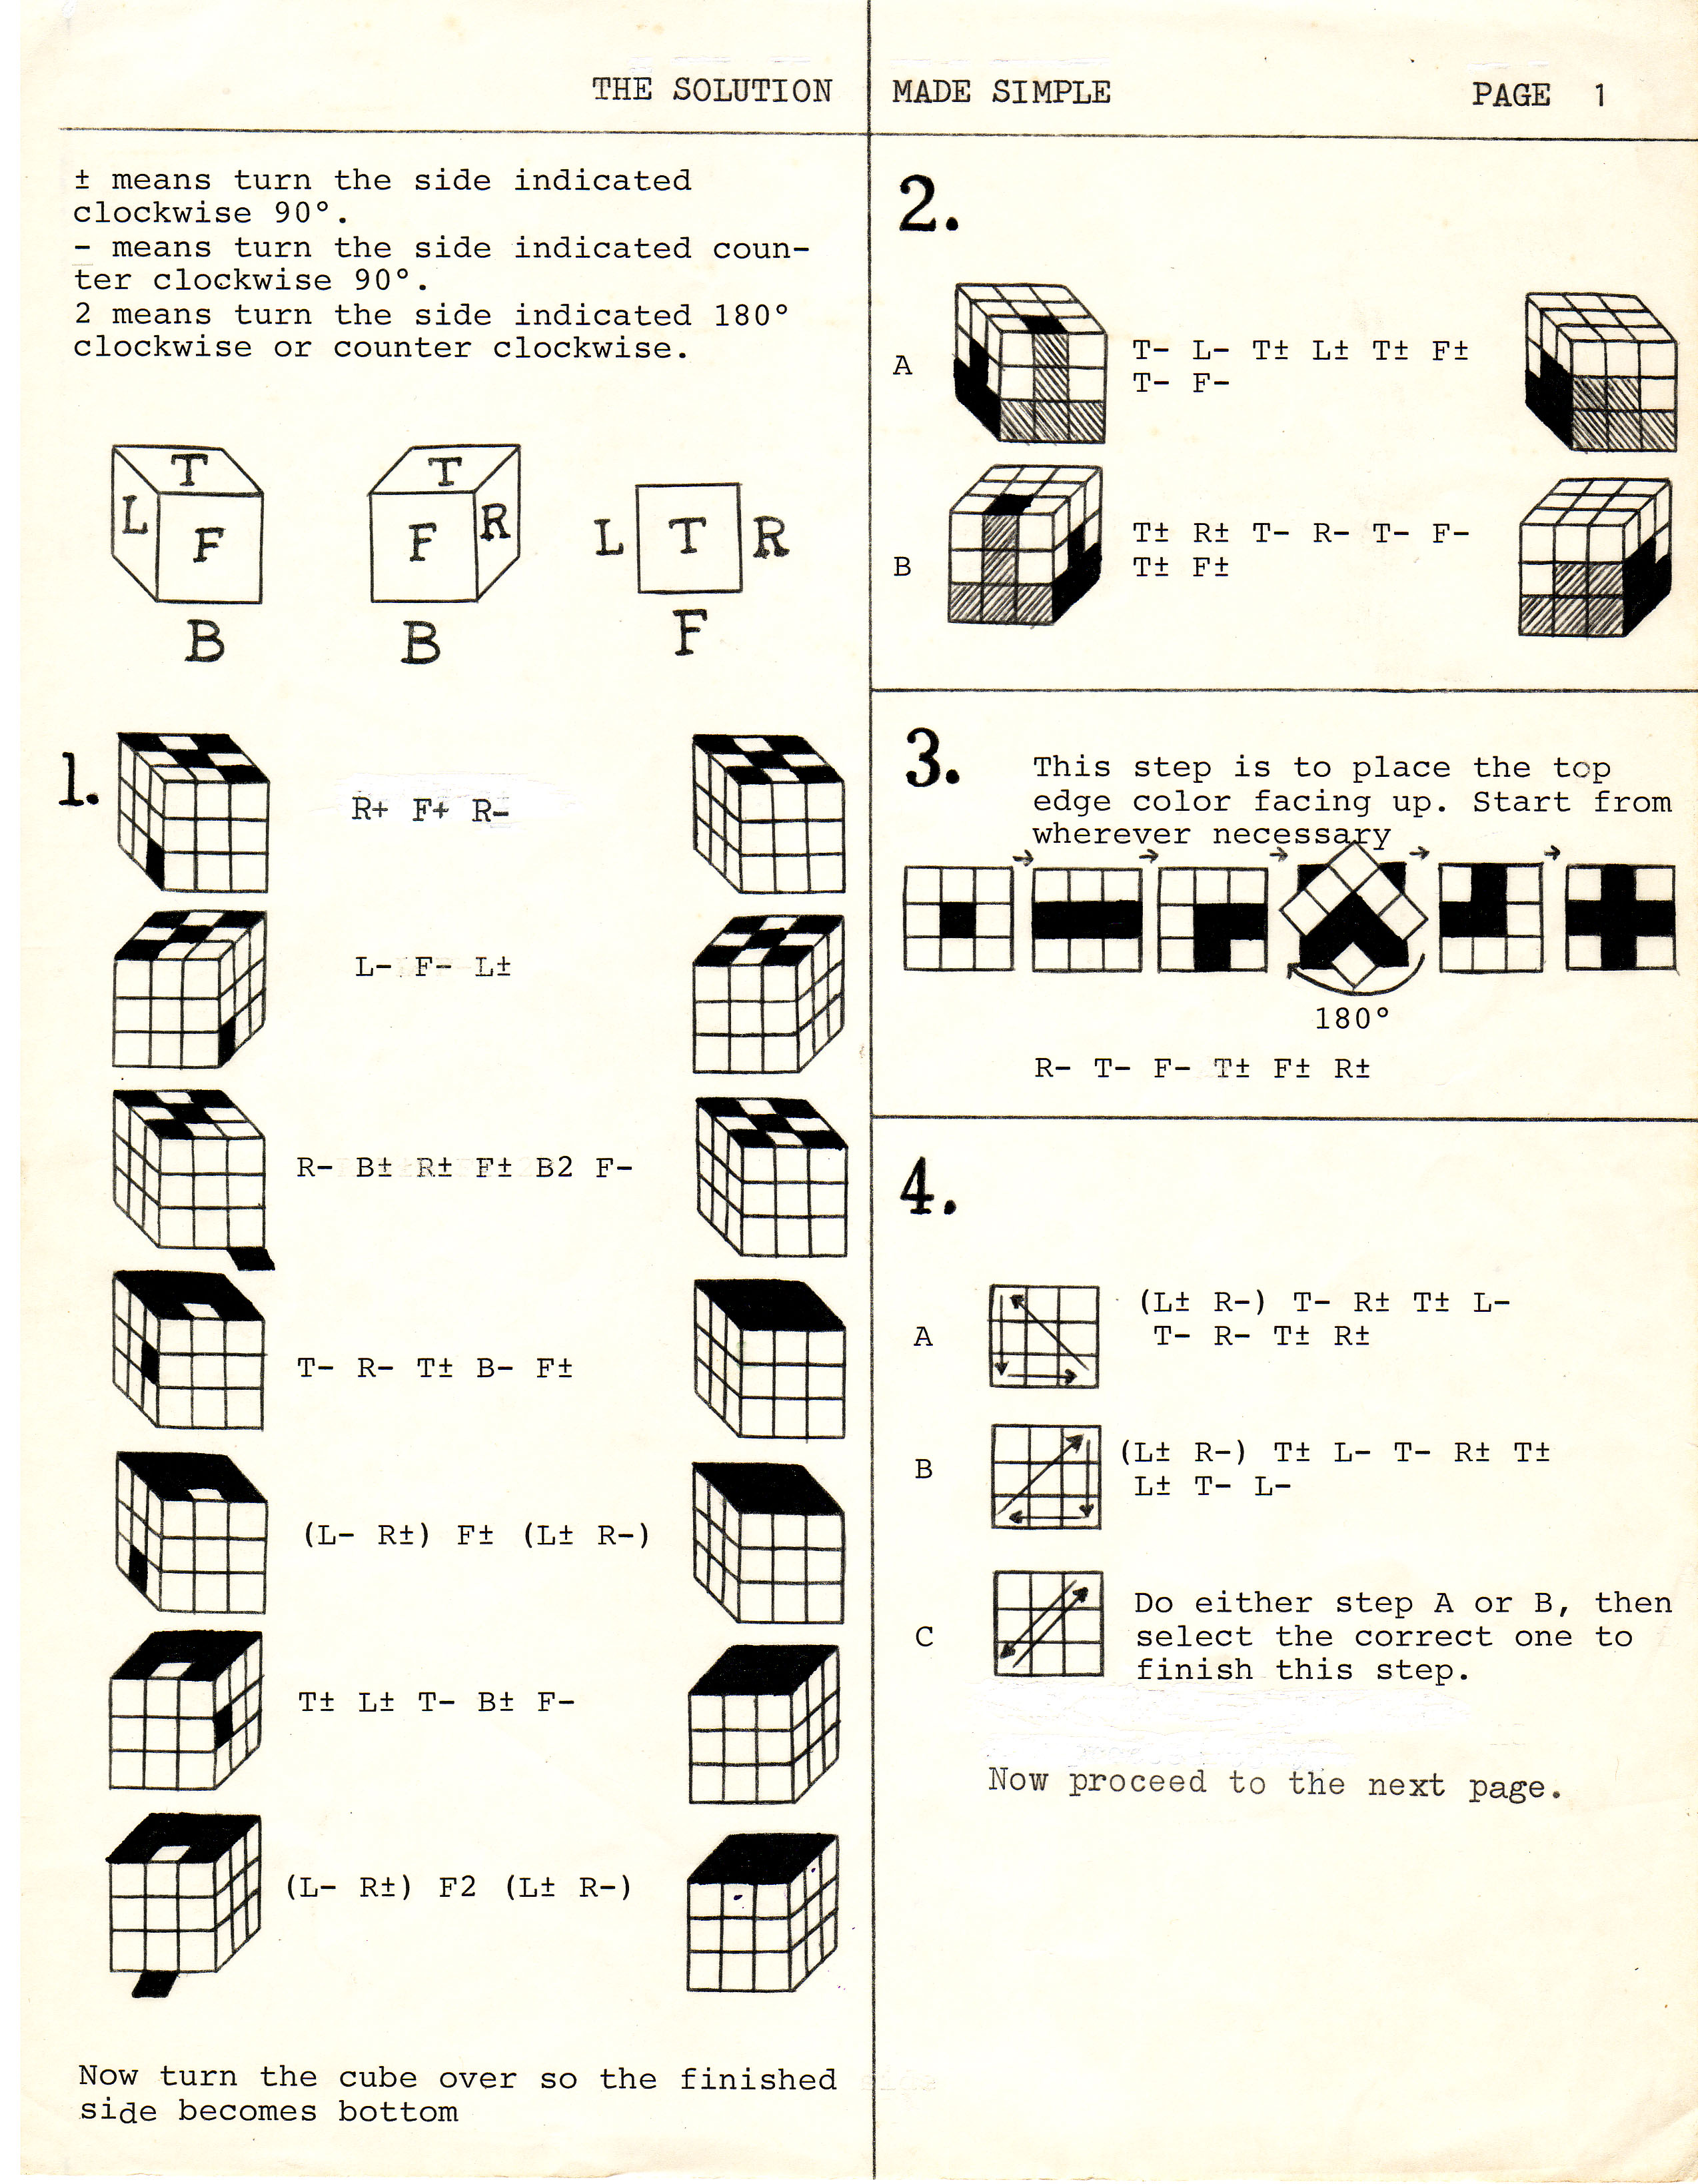 Steve's Rubik's Cube Page